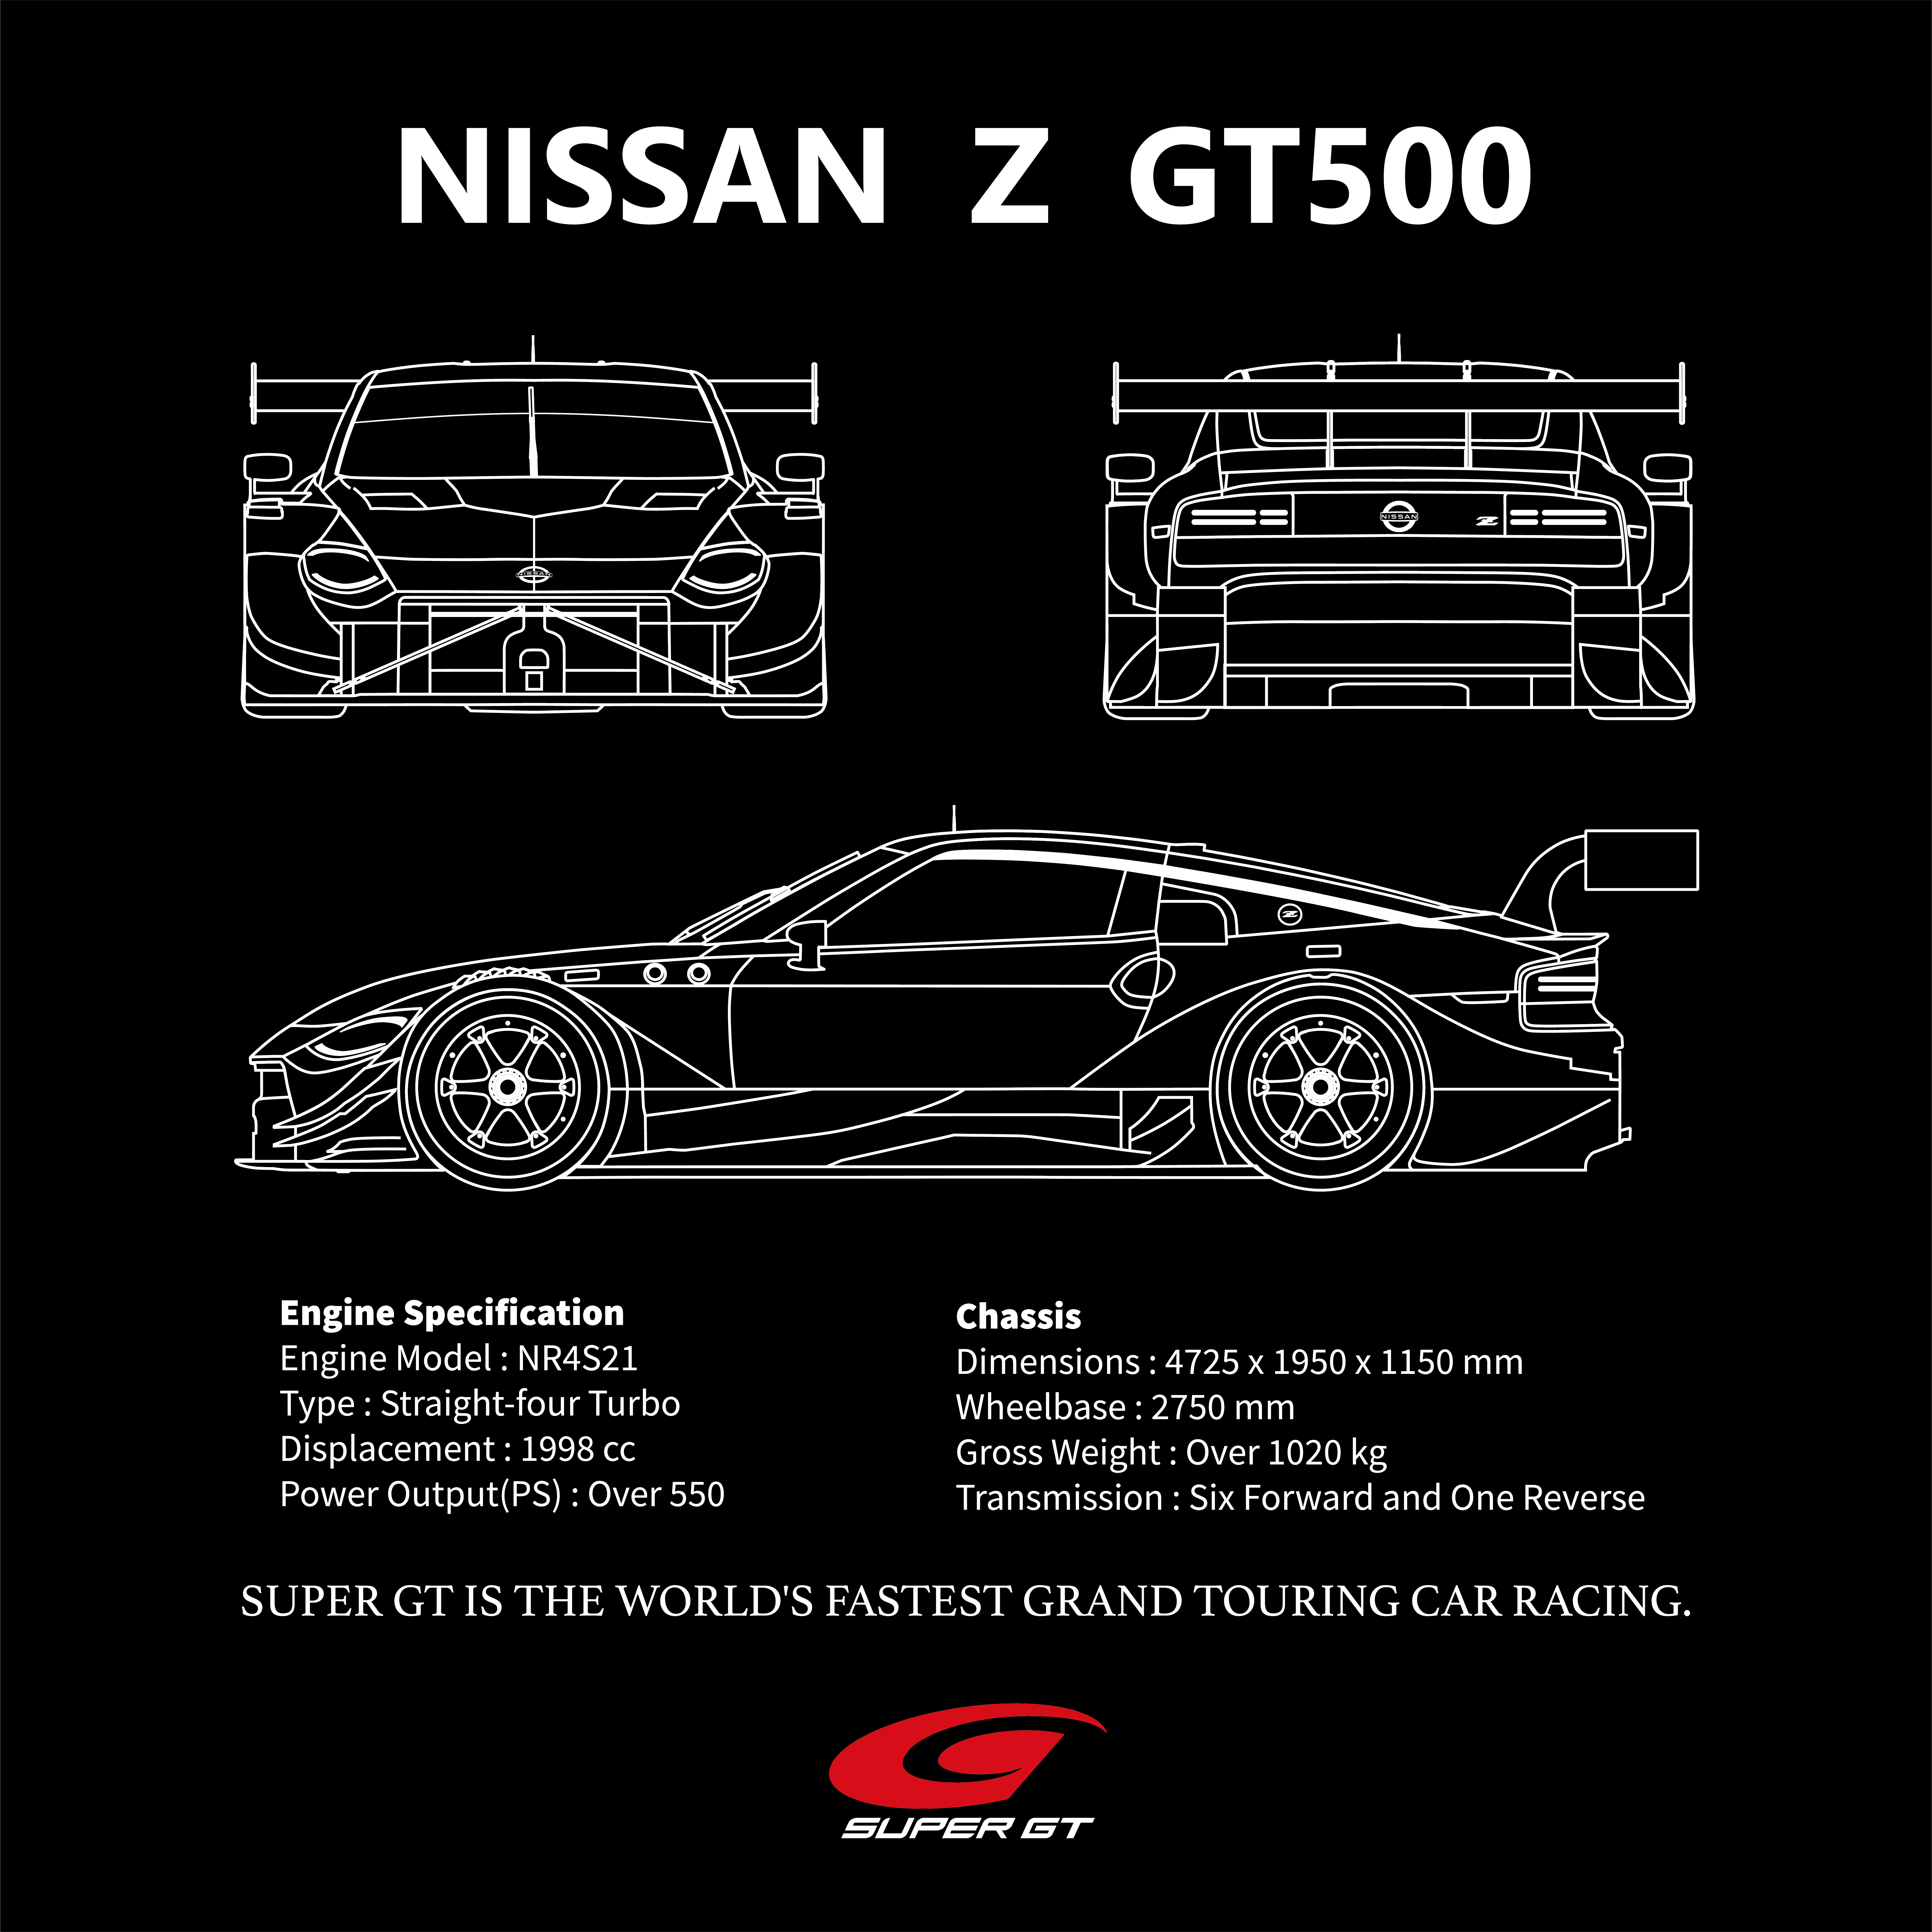 GT500マシン クリアファイル NISSAN